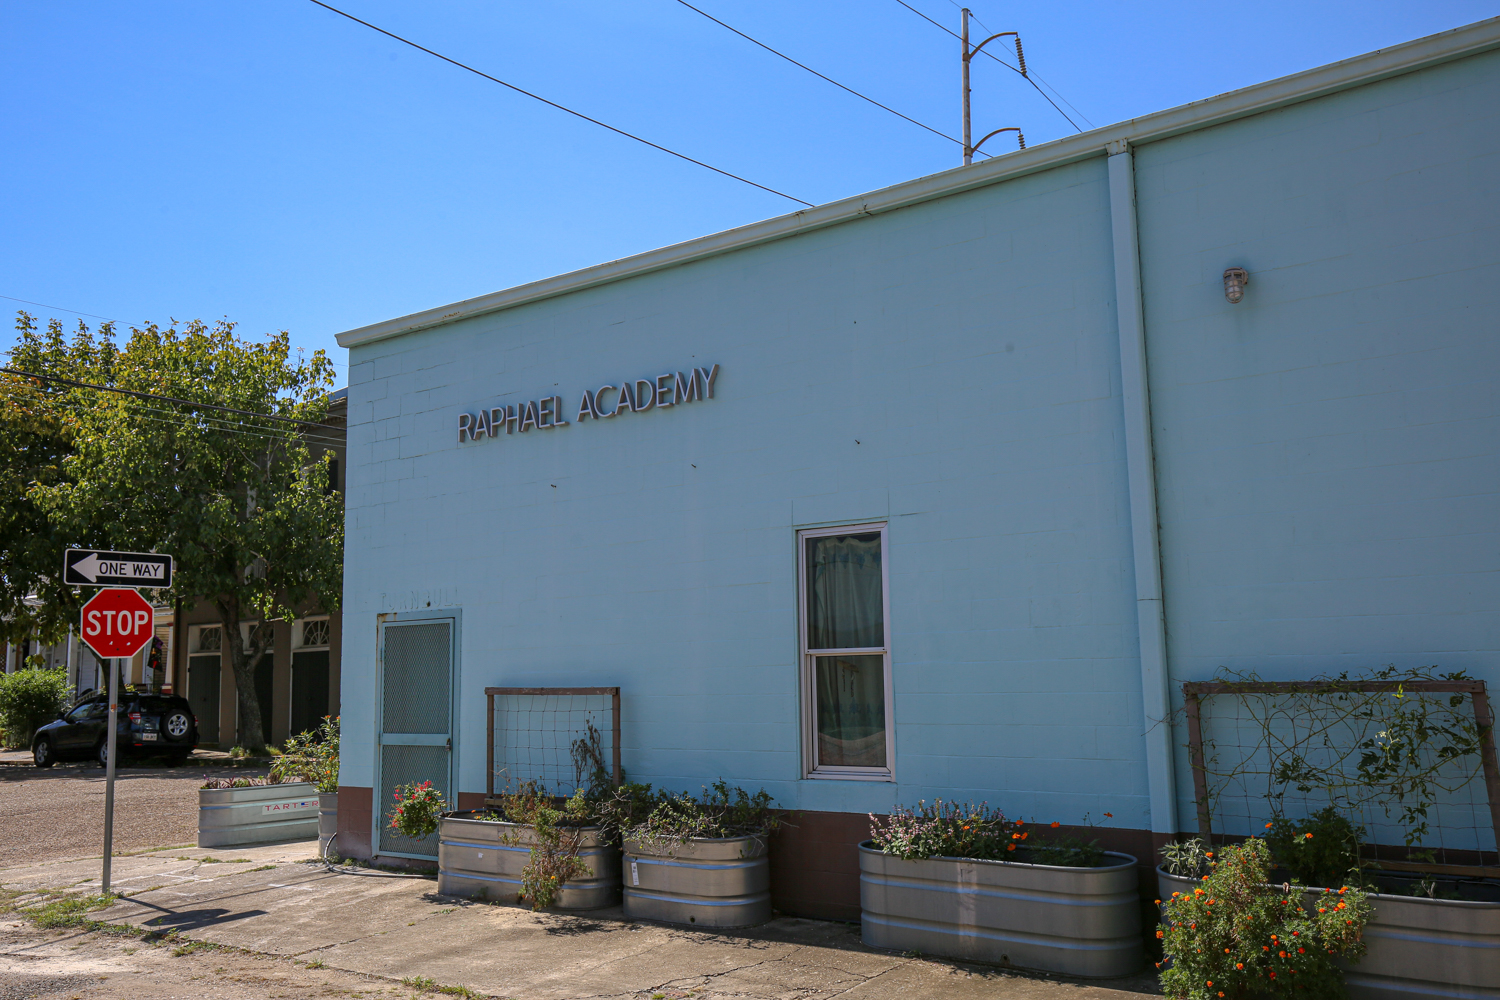 Exterior shot of Raphael Academy building